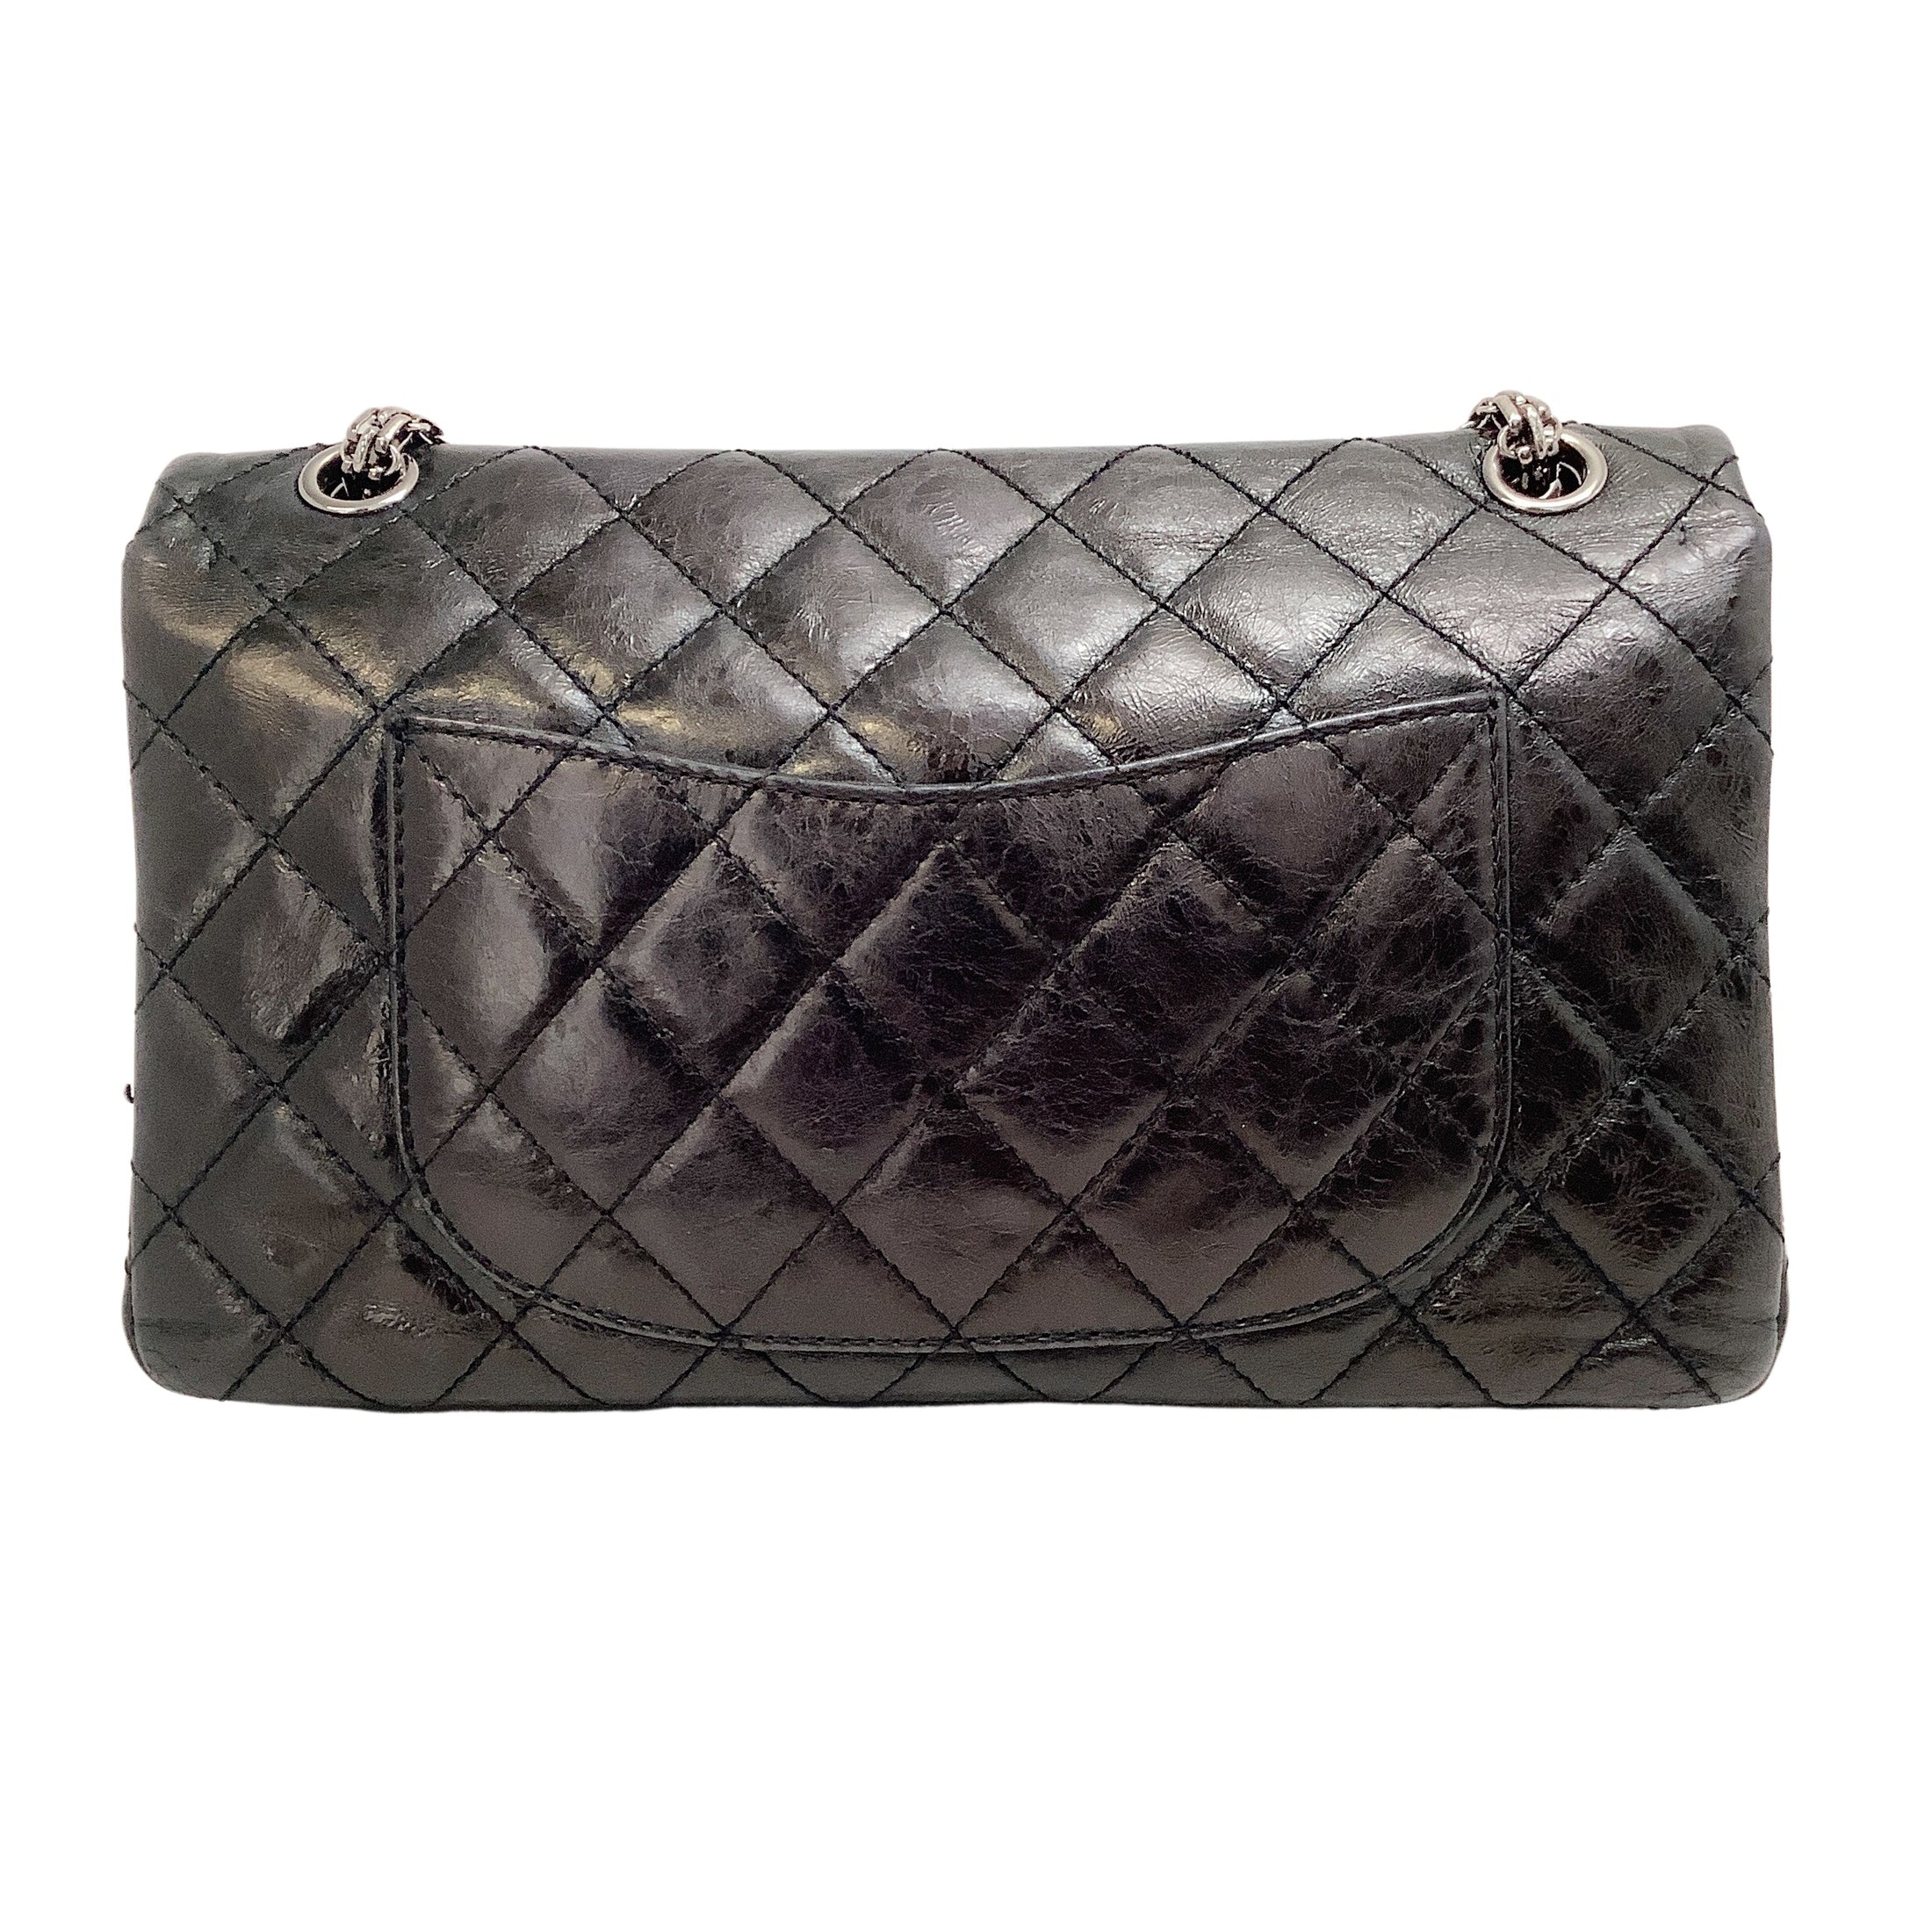 Chanel Black Metallic Leather Double Flap Shoulder Bag